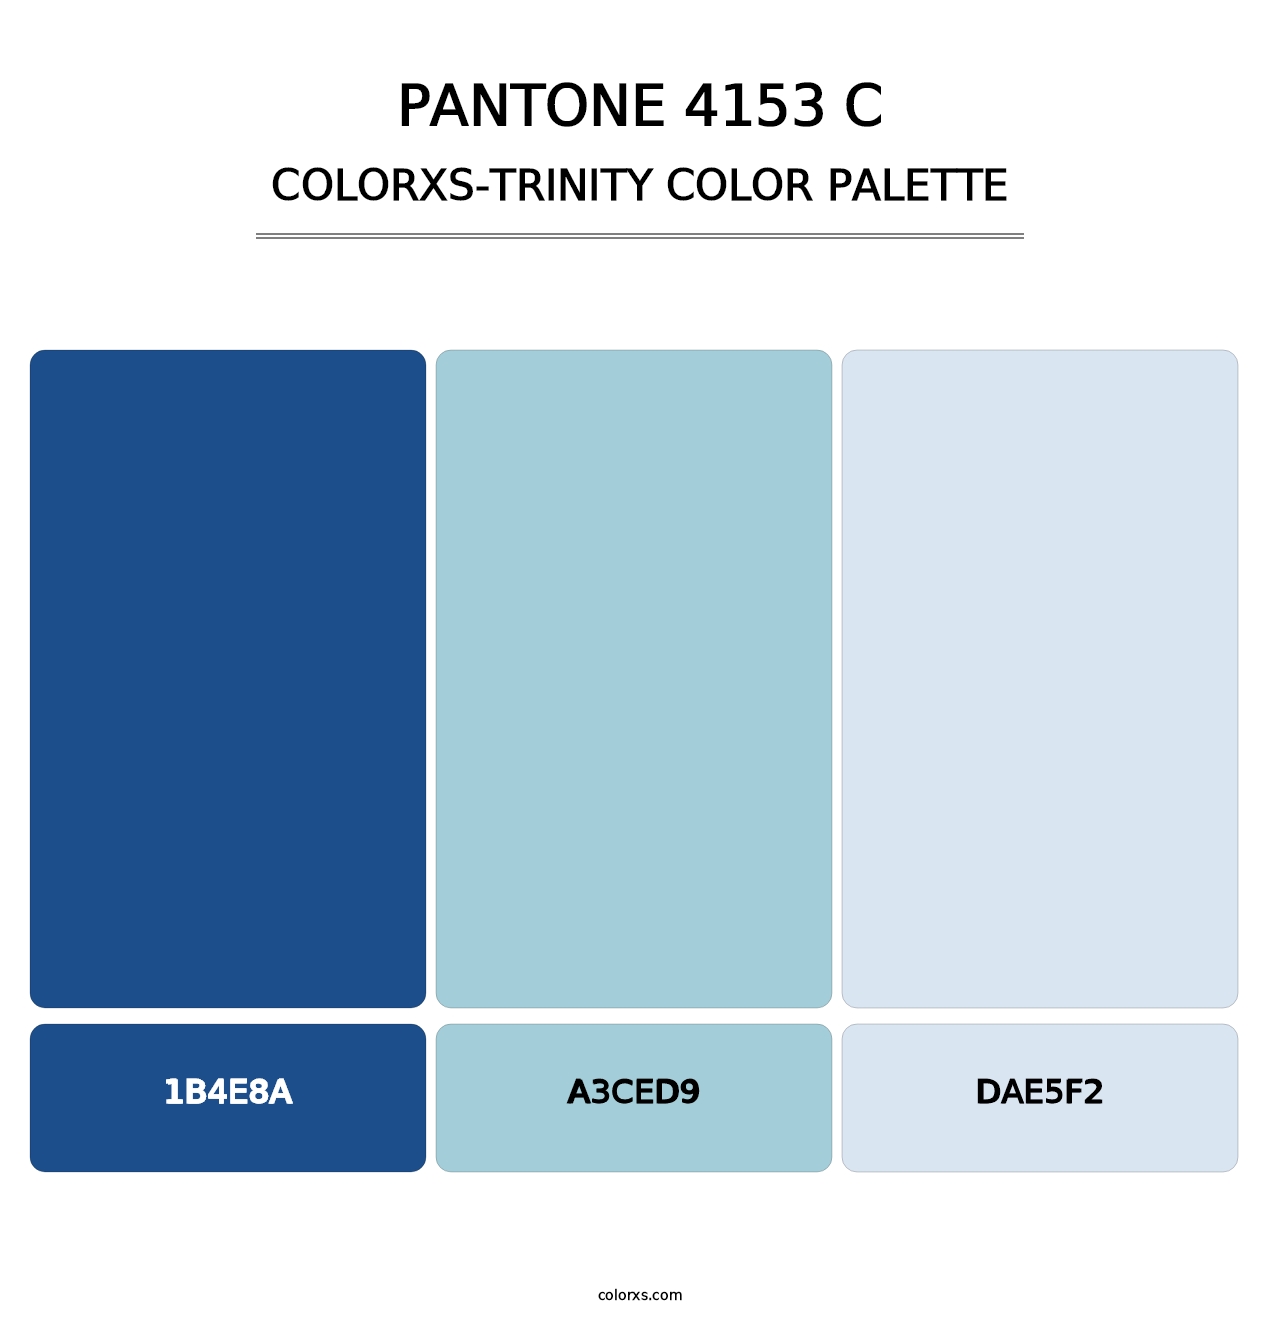 PANTONE 4153 C - Colorxs Trinity Palette